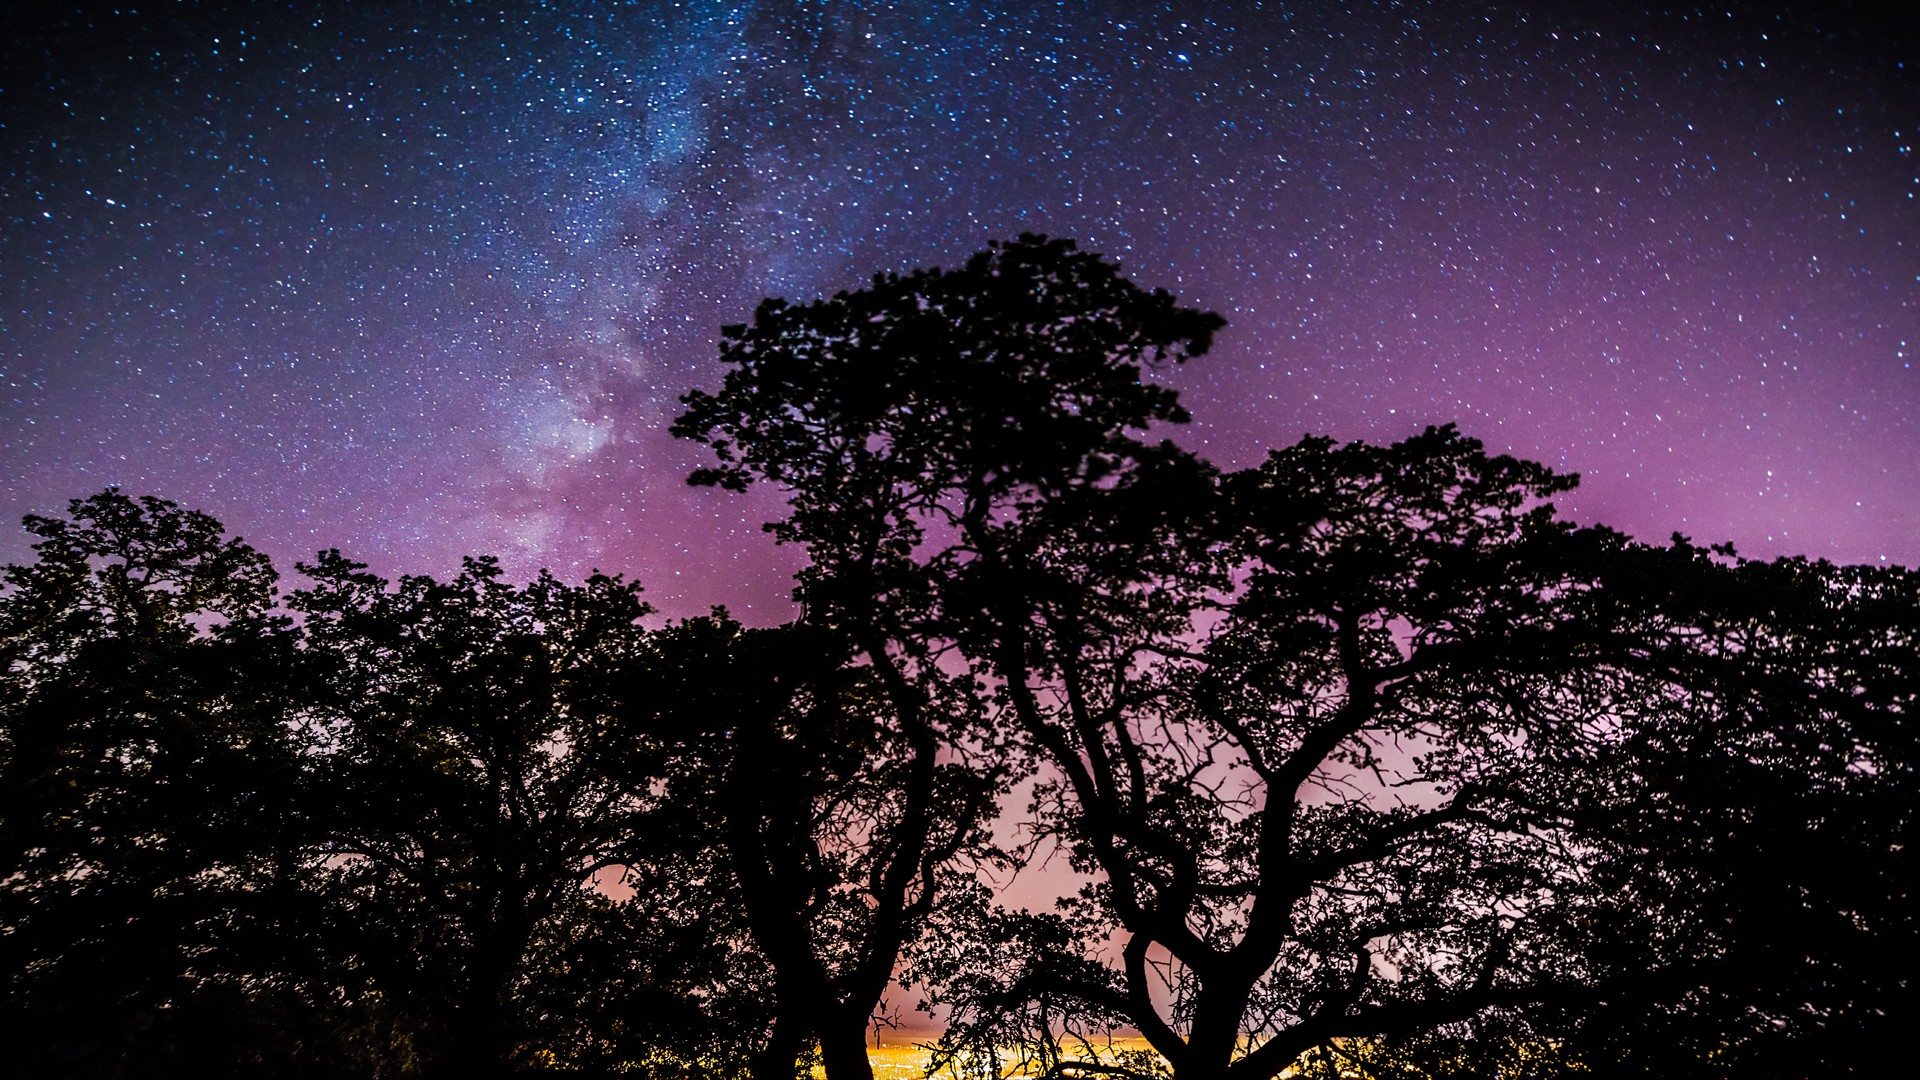 General 1920x1080 stars trees galaxy nature night sky night sky silhouette